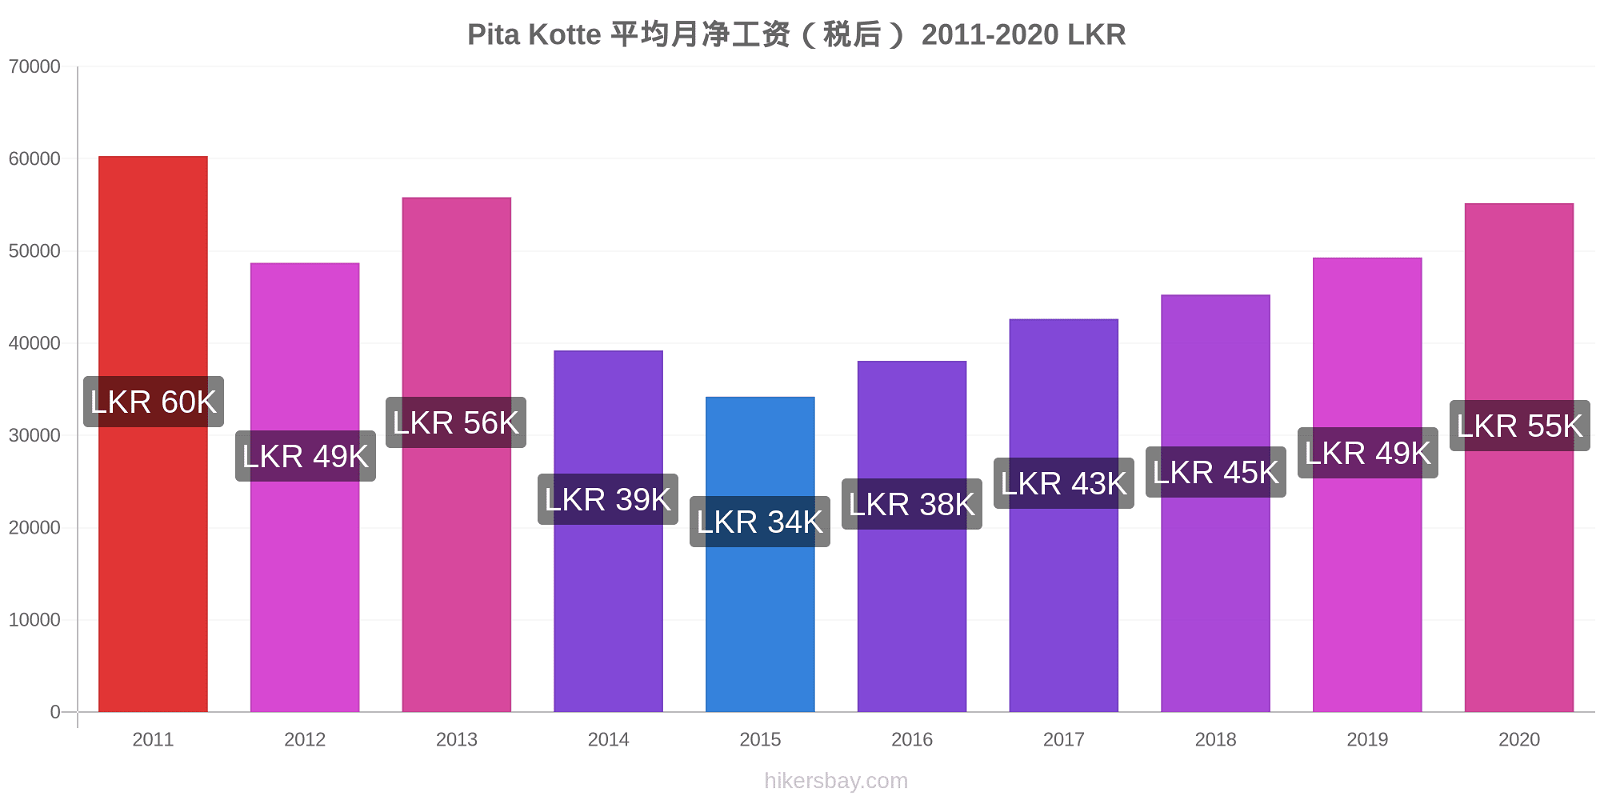 Pita Kotte 价格变化 平均每月净工资 （后税） hikersbay.com